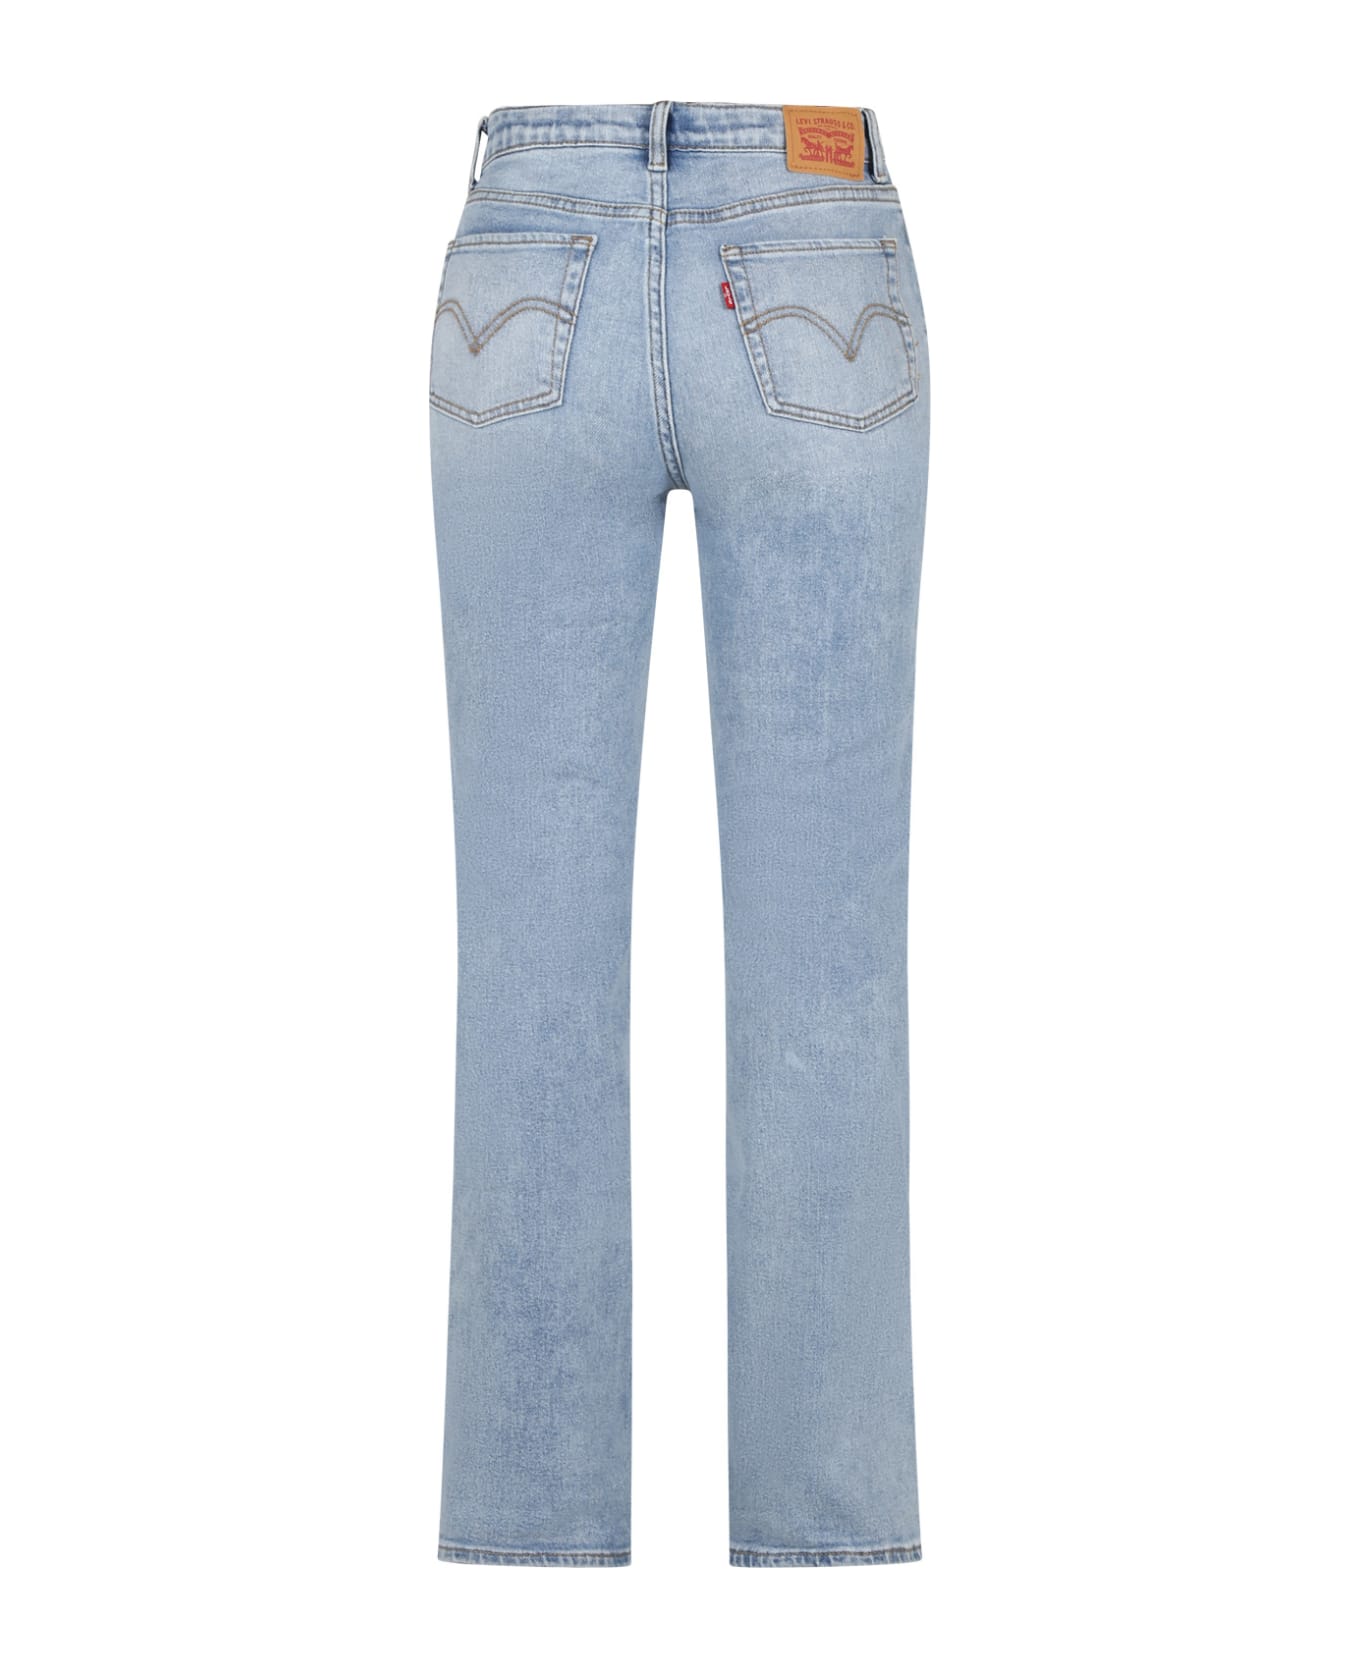 Levi's Denim Jeans For Girl - Denim ボトムス